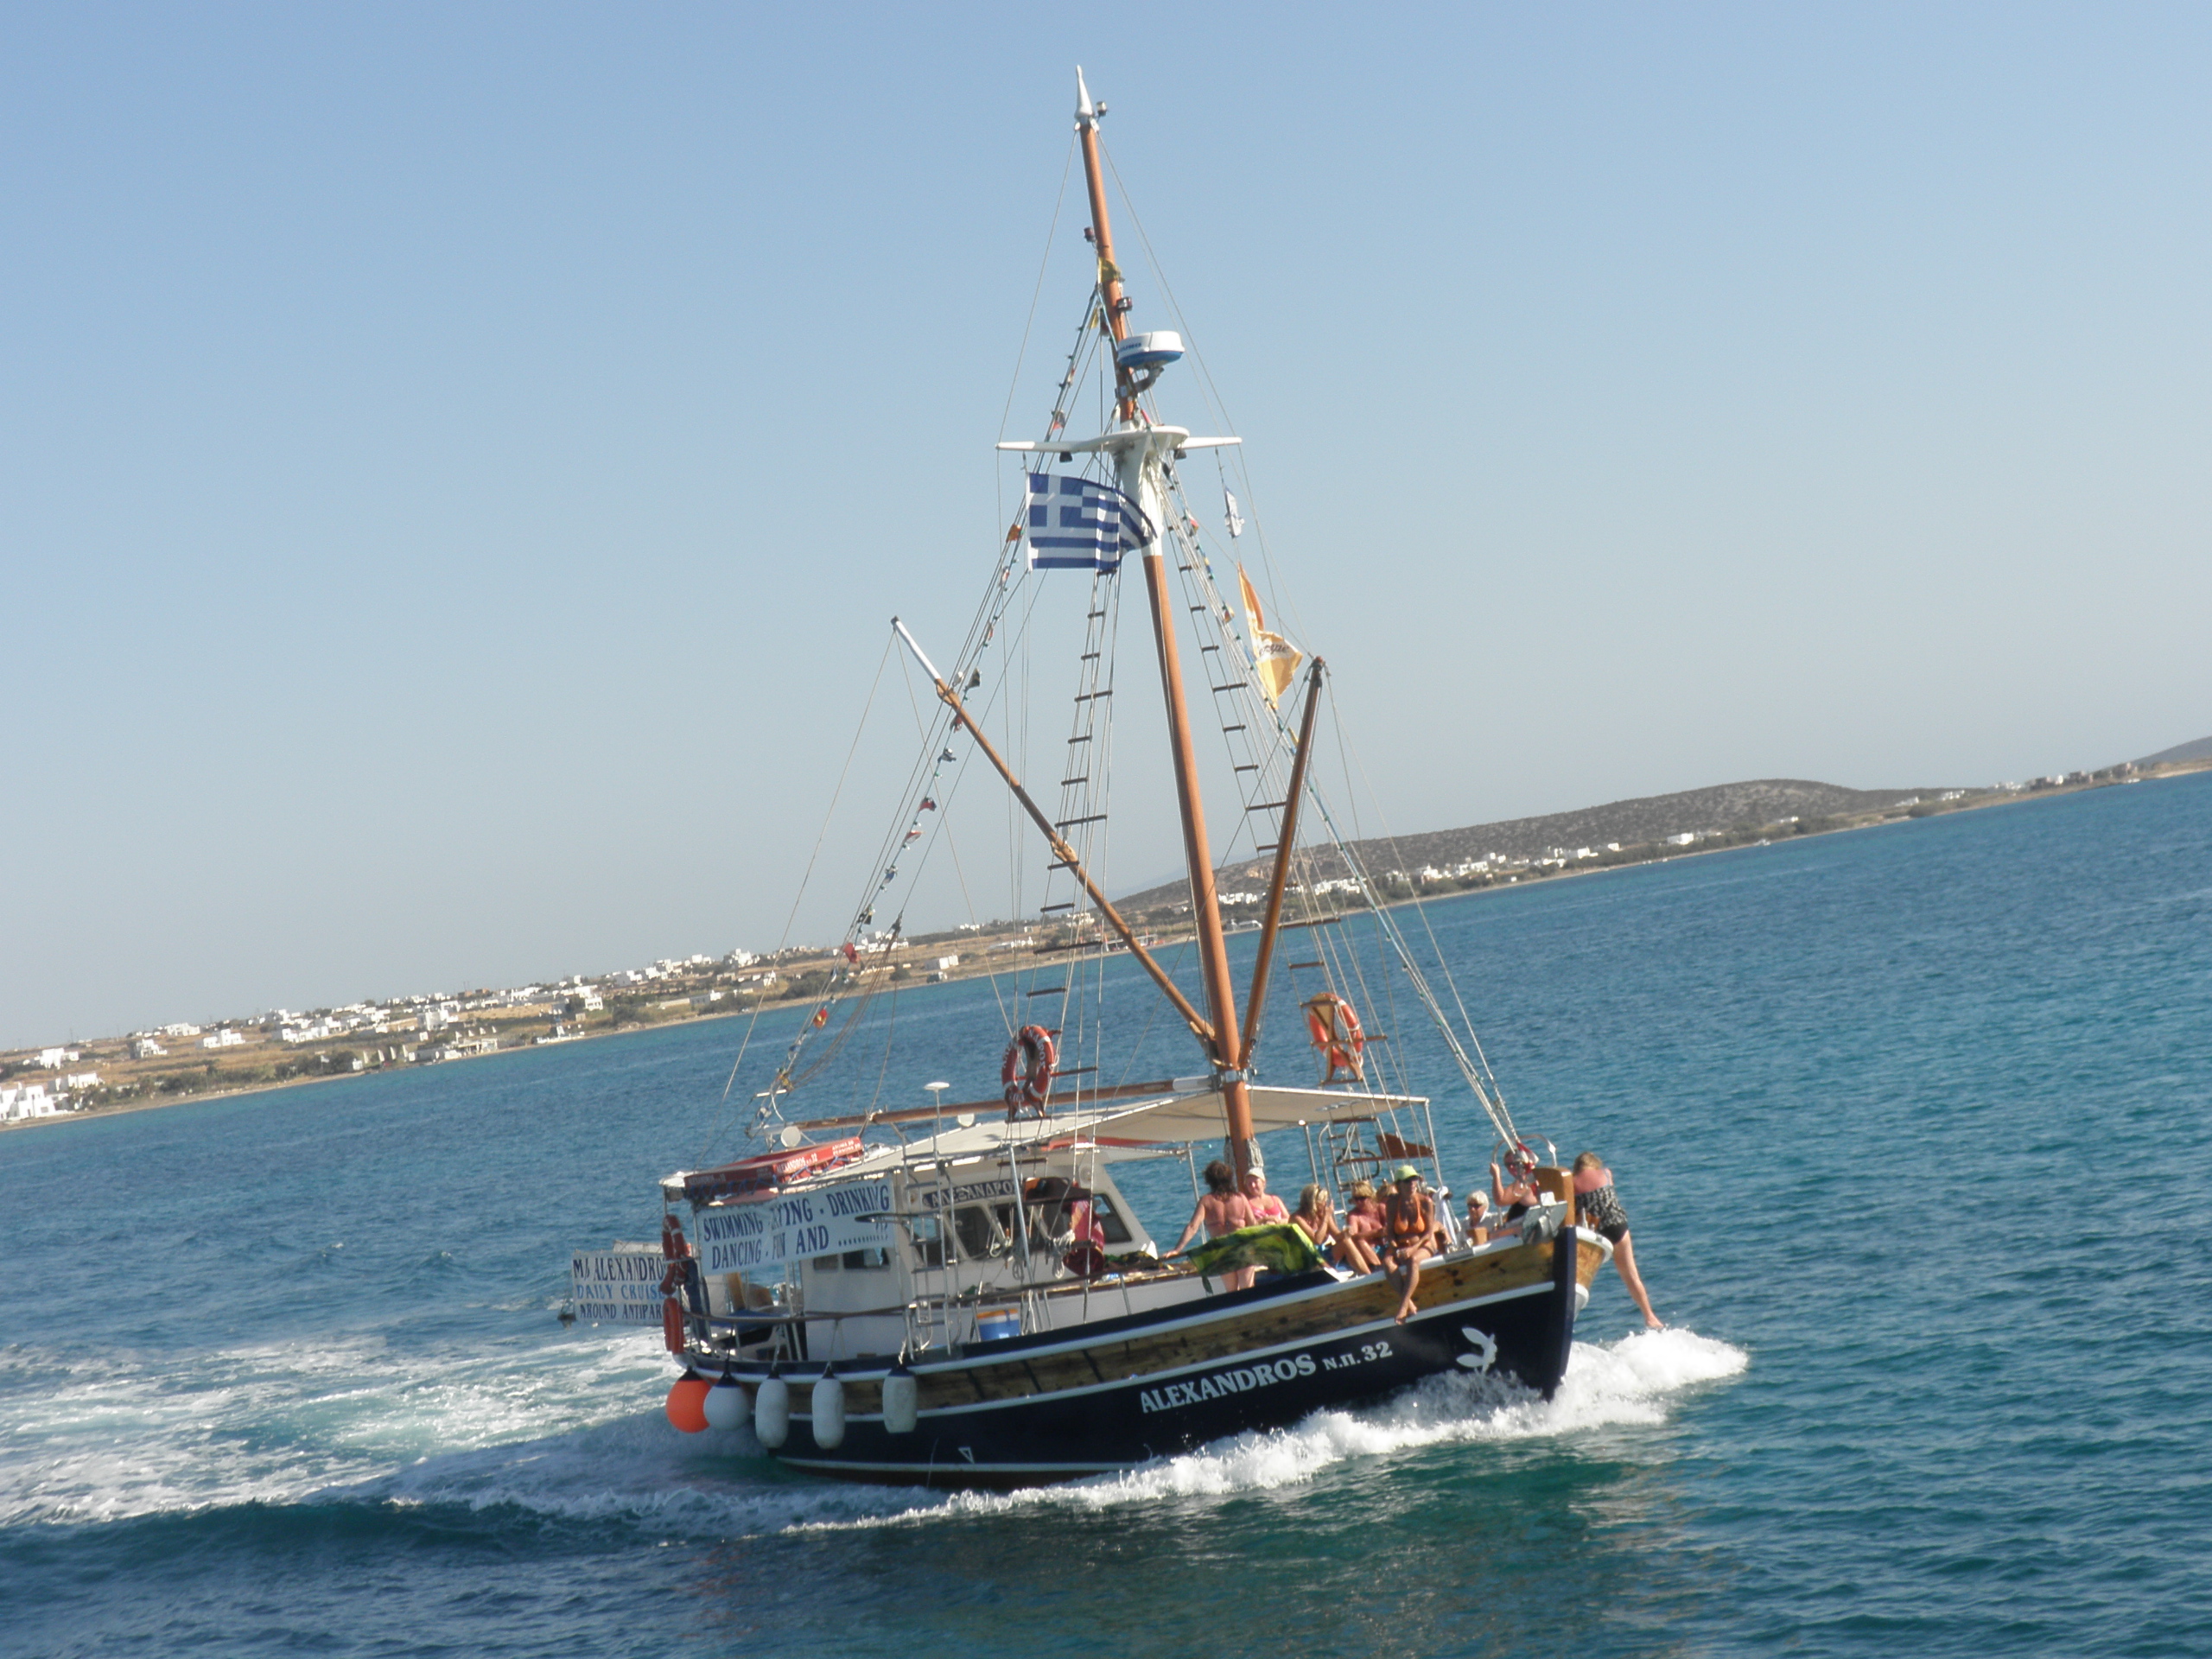 Greek Islands, Captain Ben's Boat | Another Bag, More Travel